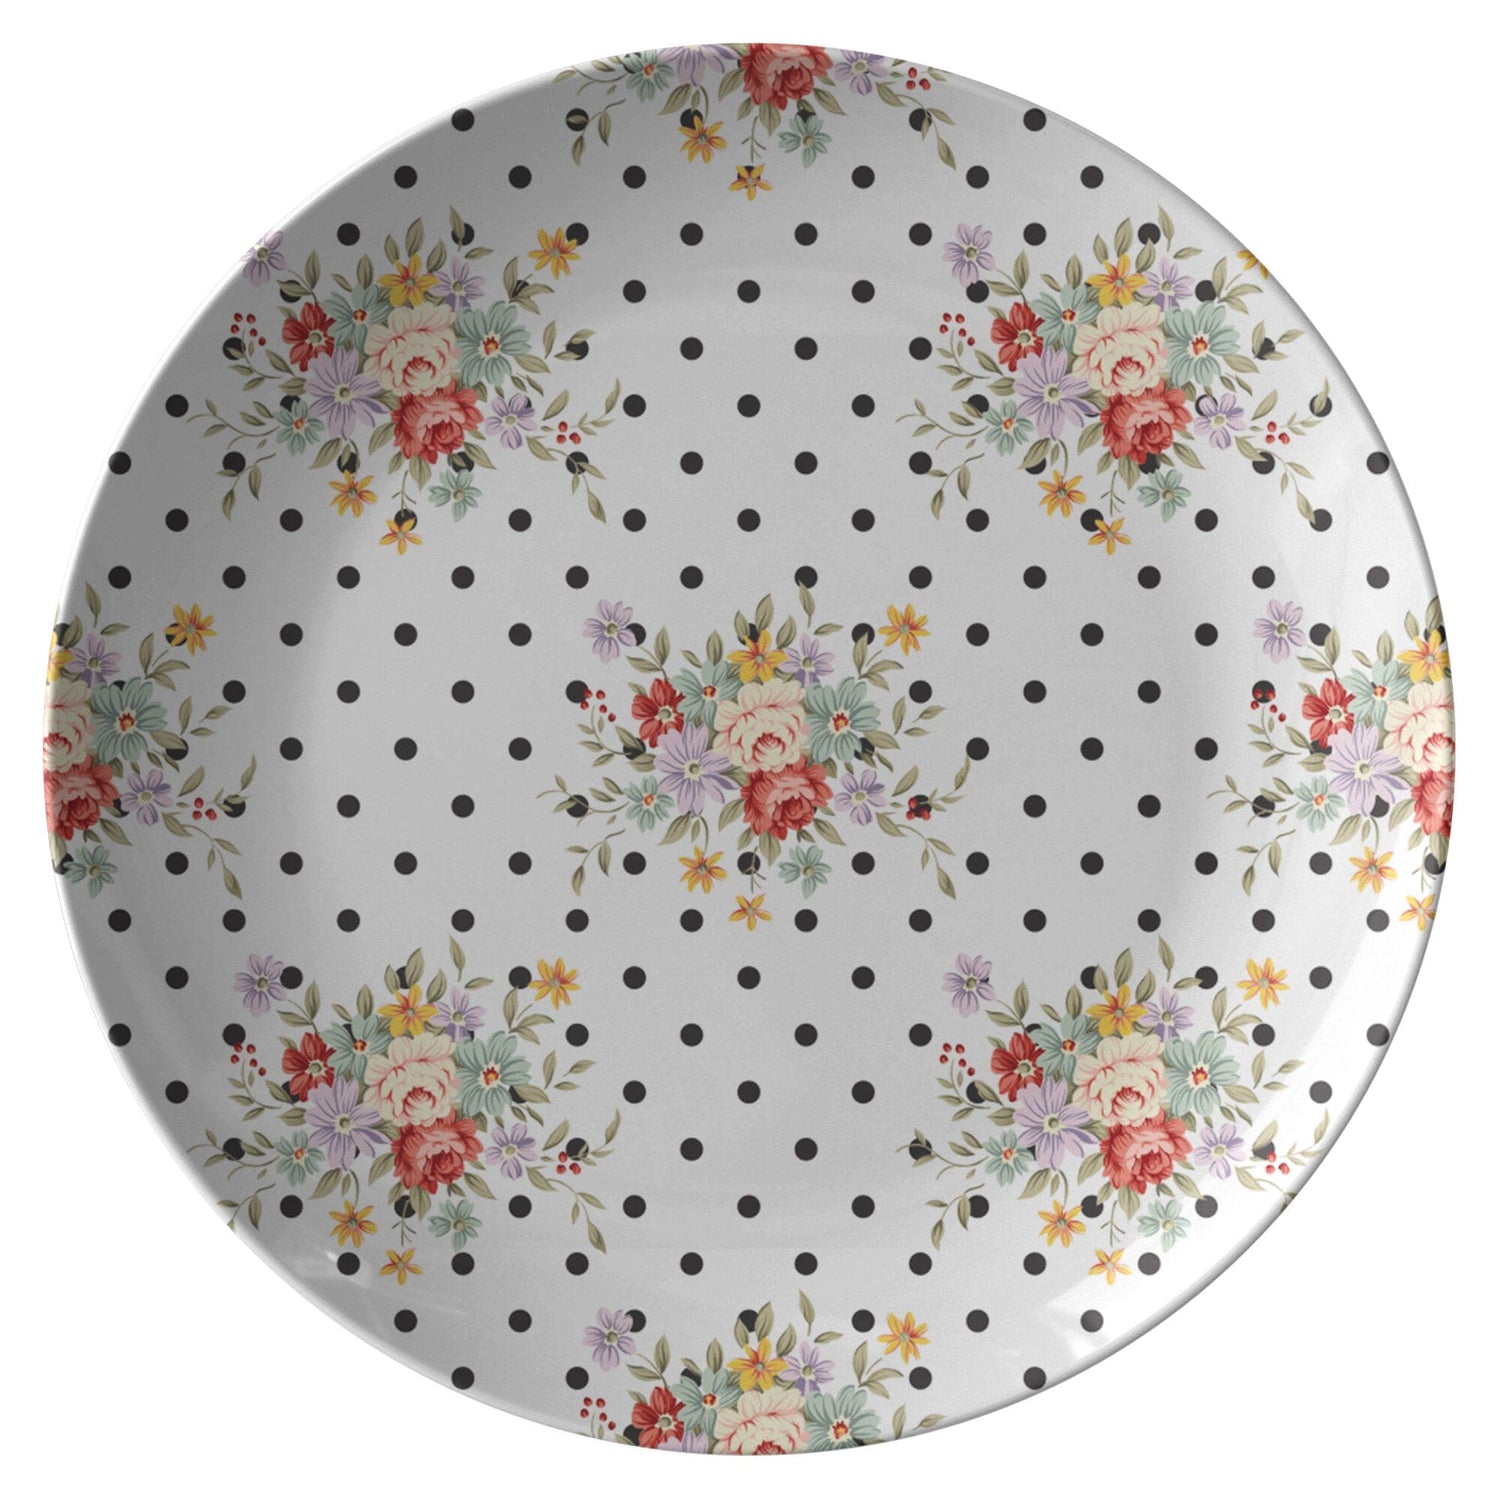 Kate McEnroe New York Dinner Plate in Shabby Chic Polka Dots FloralPlates9820SINGLE